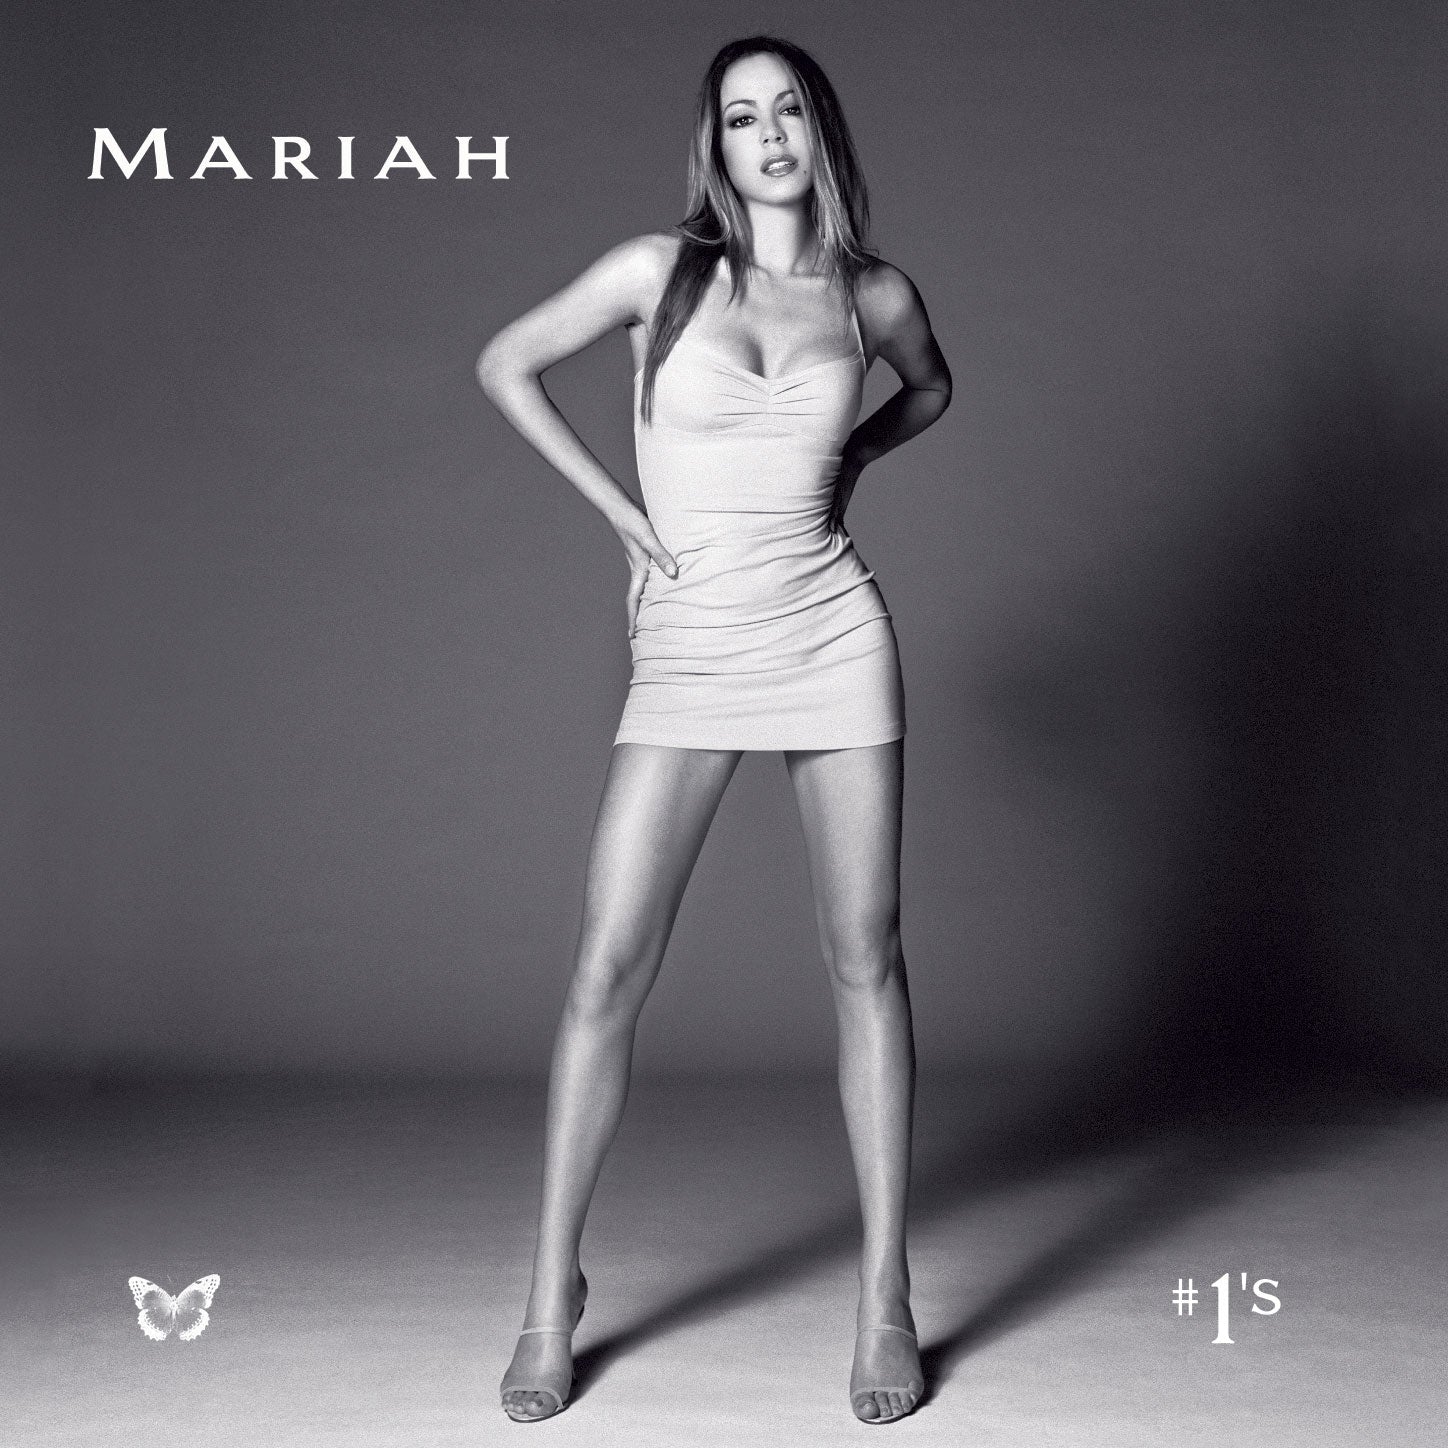 Mariah Carey - #1's: Metallic Silver and Black Swirl 2LP